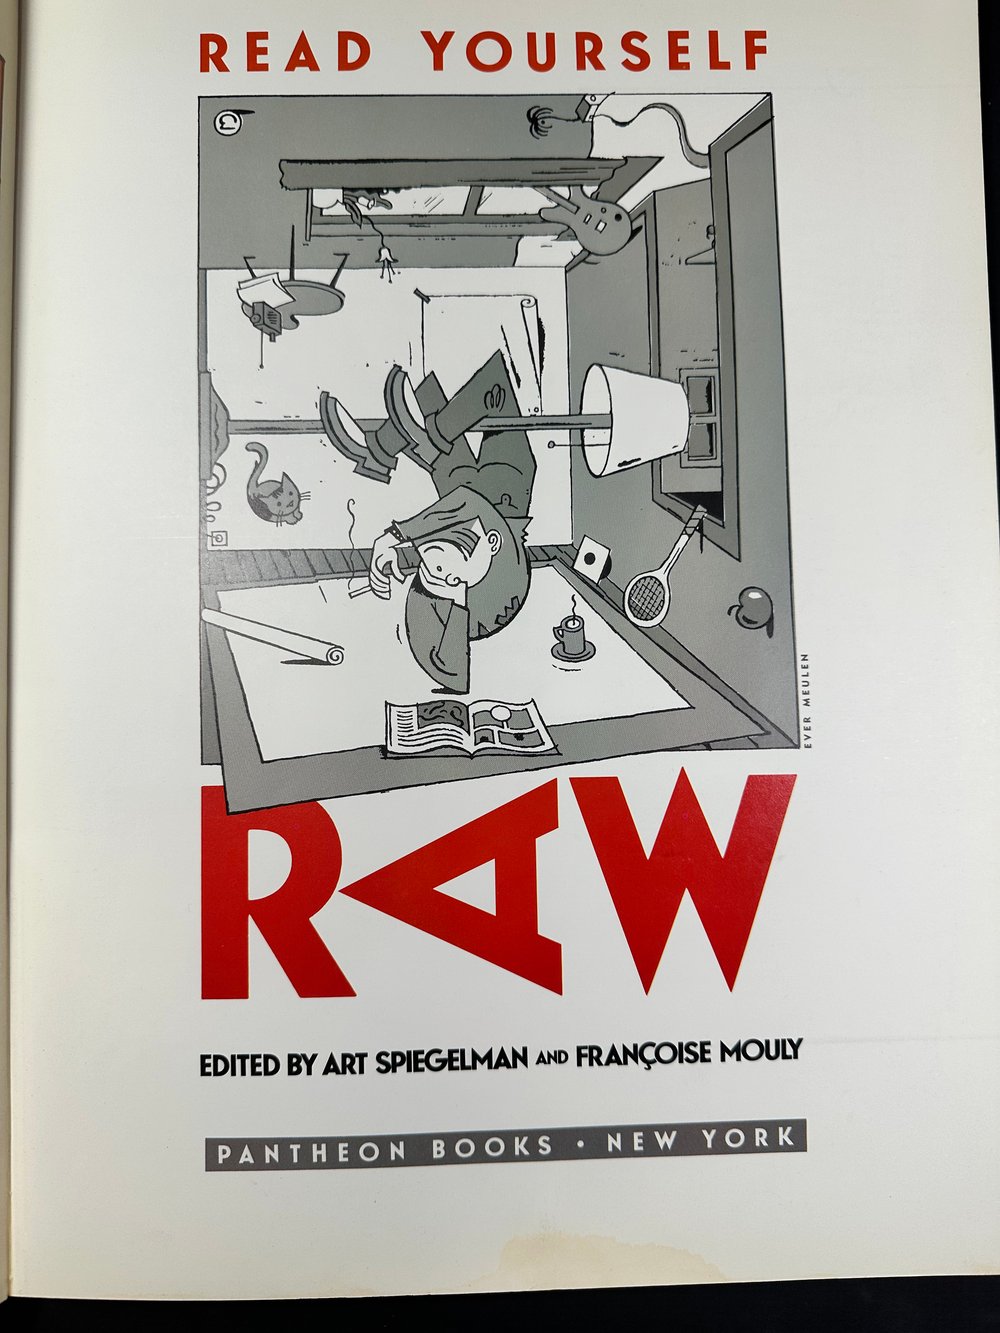 RAW “Read Yourself Raw” Edited:  Spiegelman/Mouly